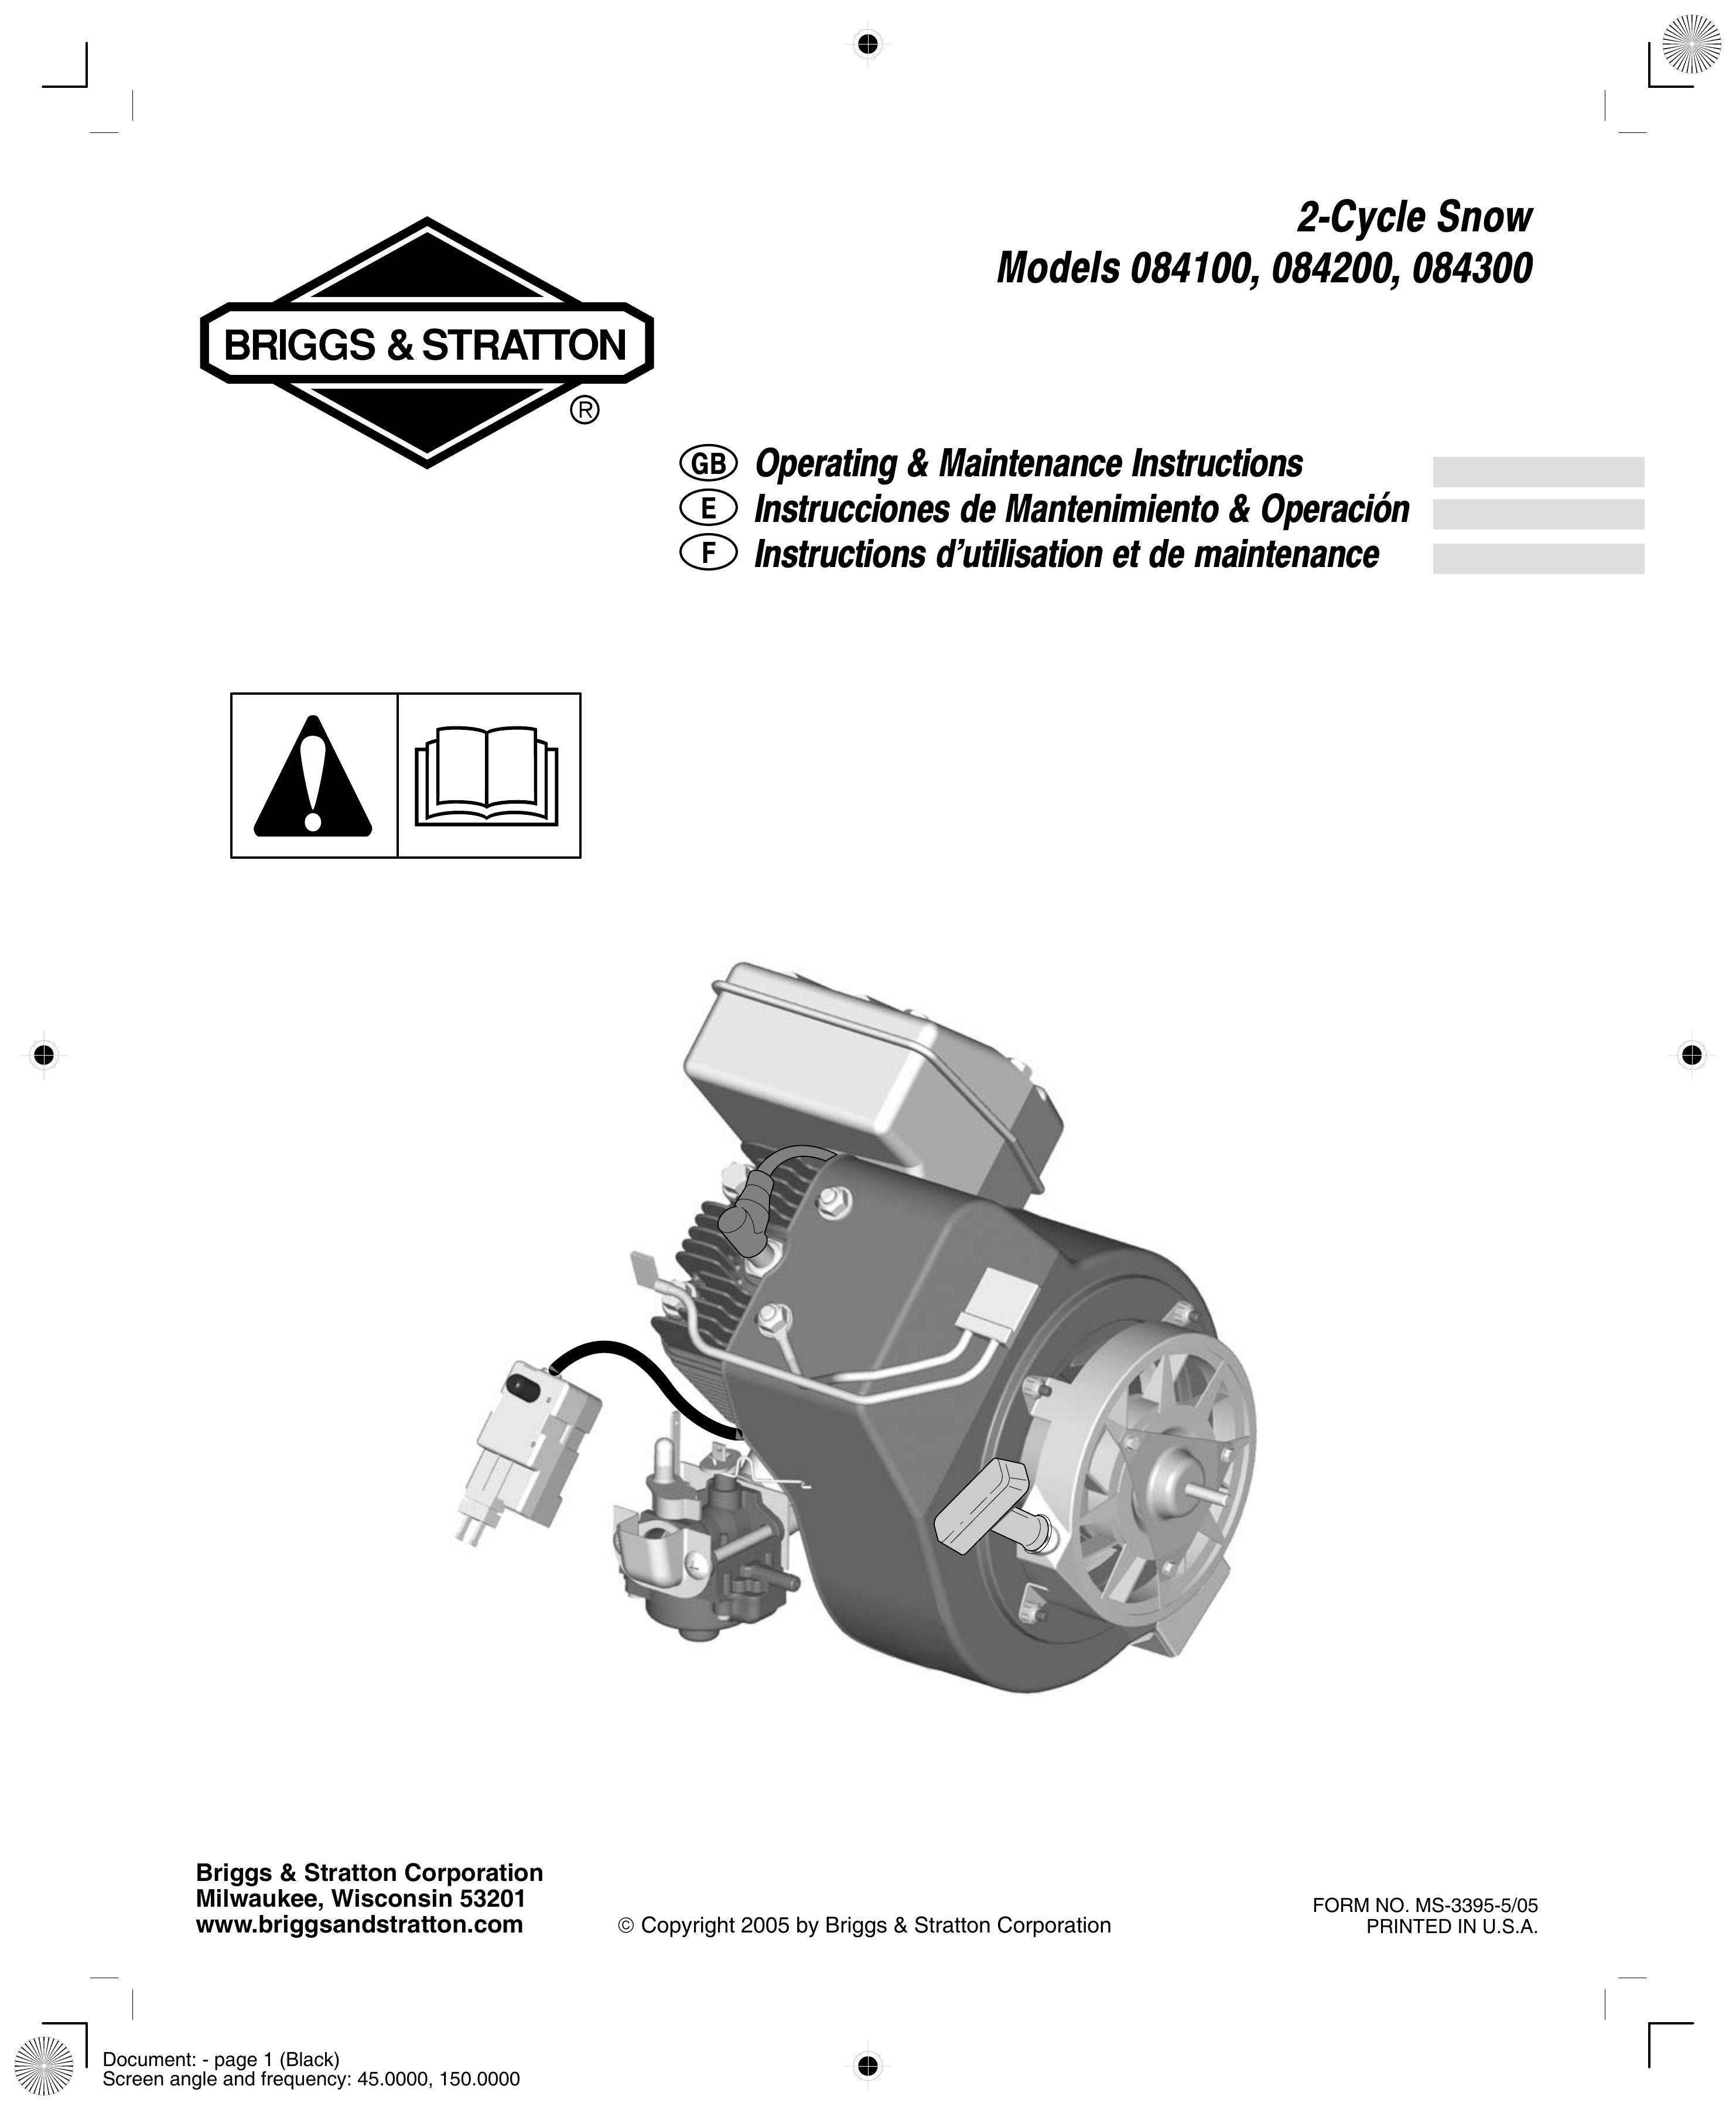 Briggs & Stratton 84300 Snow Blower User Manual